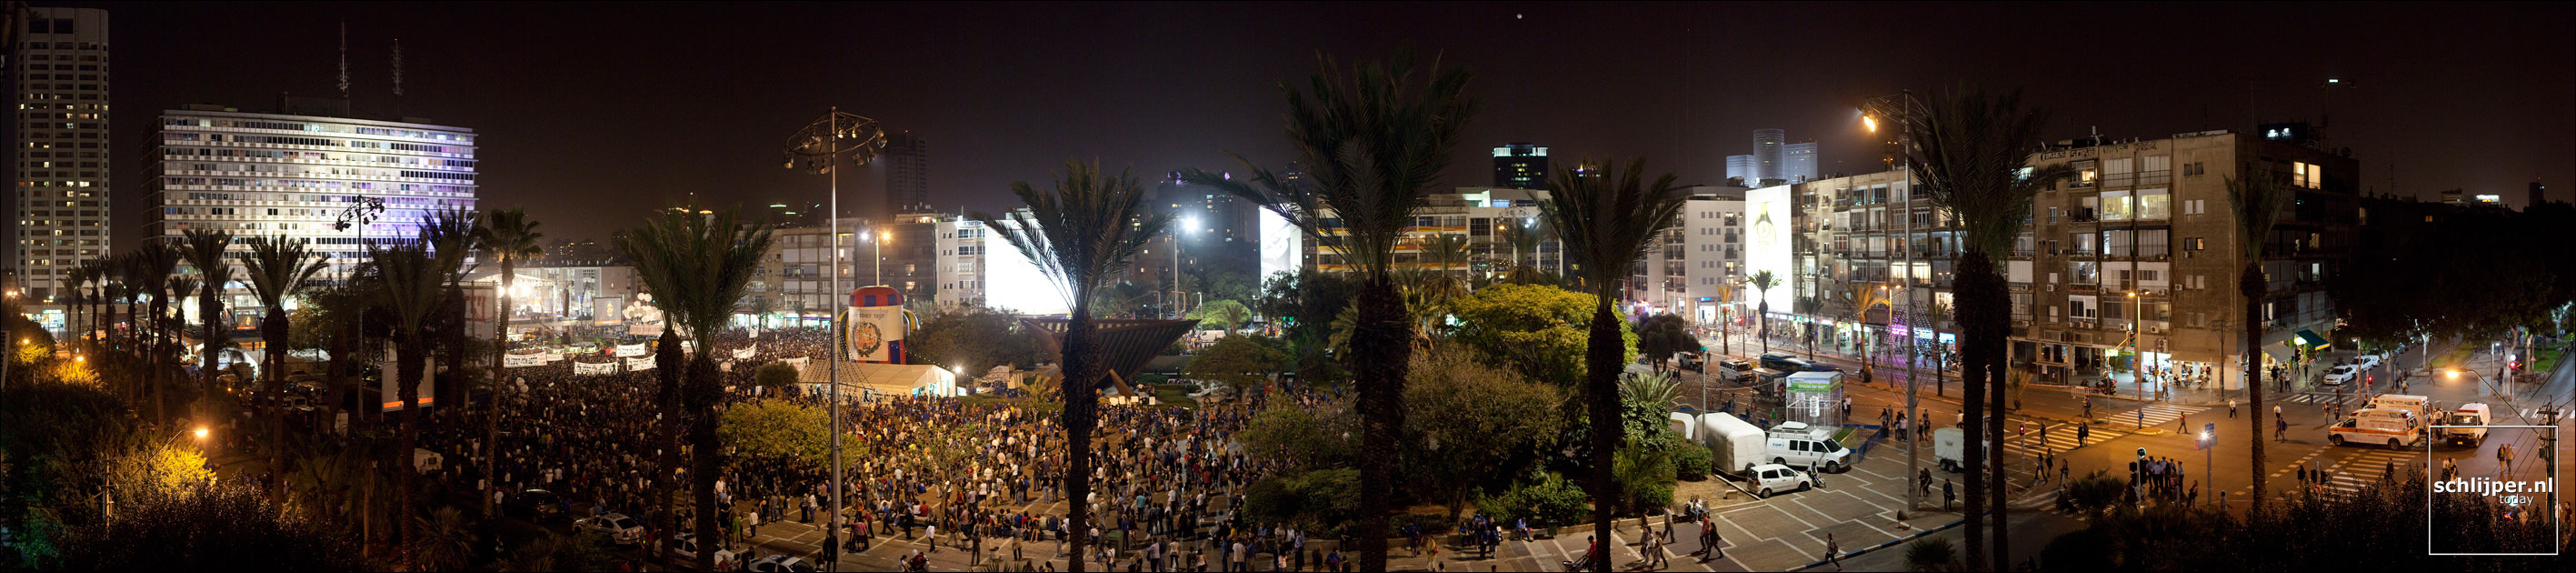 Israel, Tel Aviv, 7 november 2009